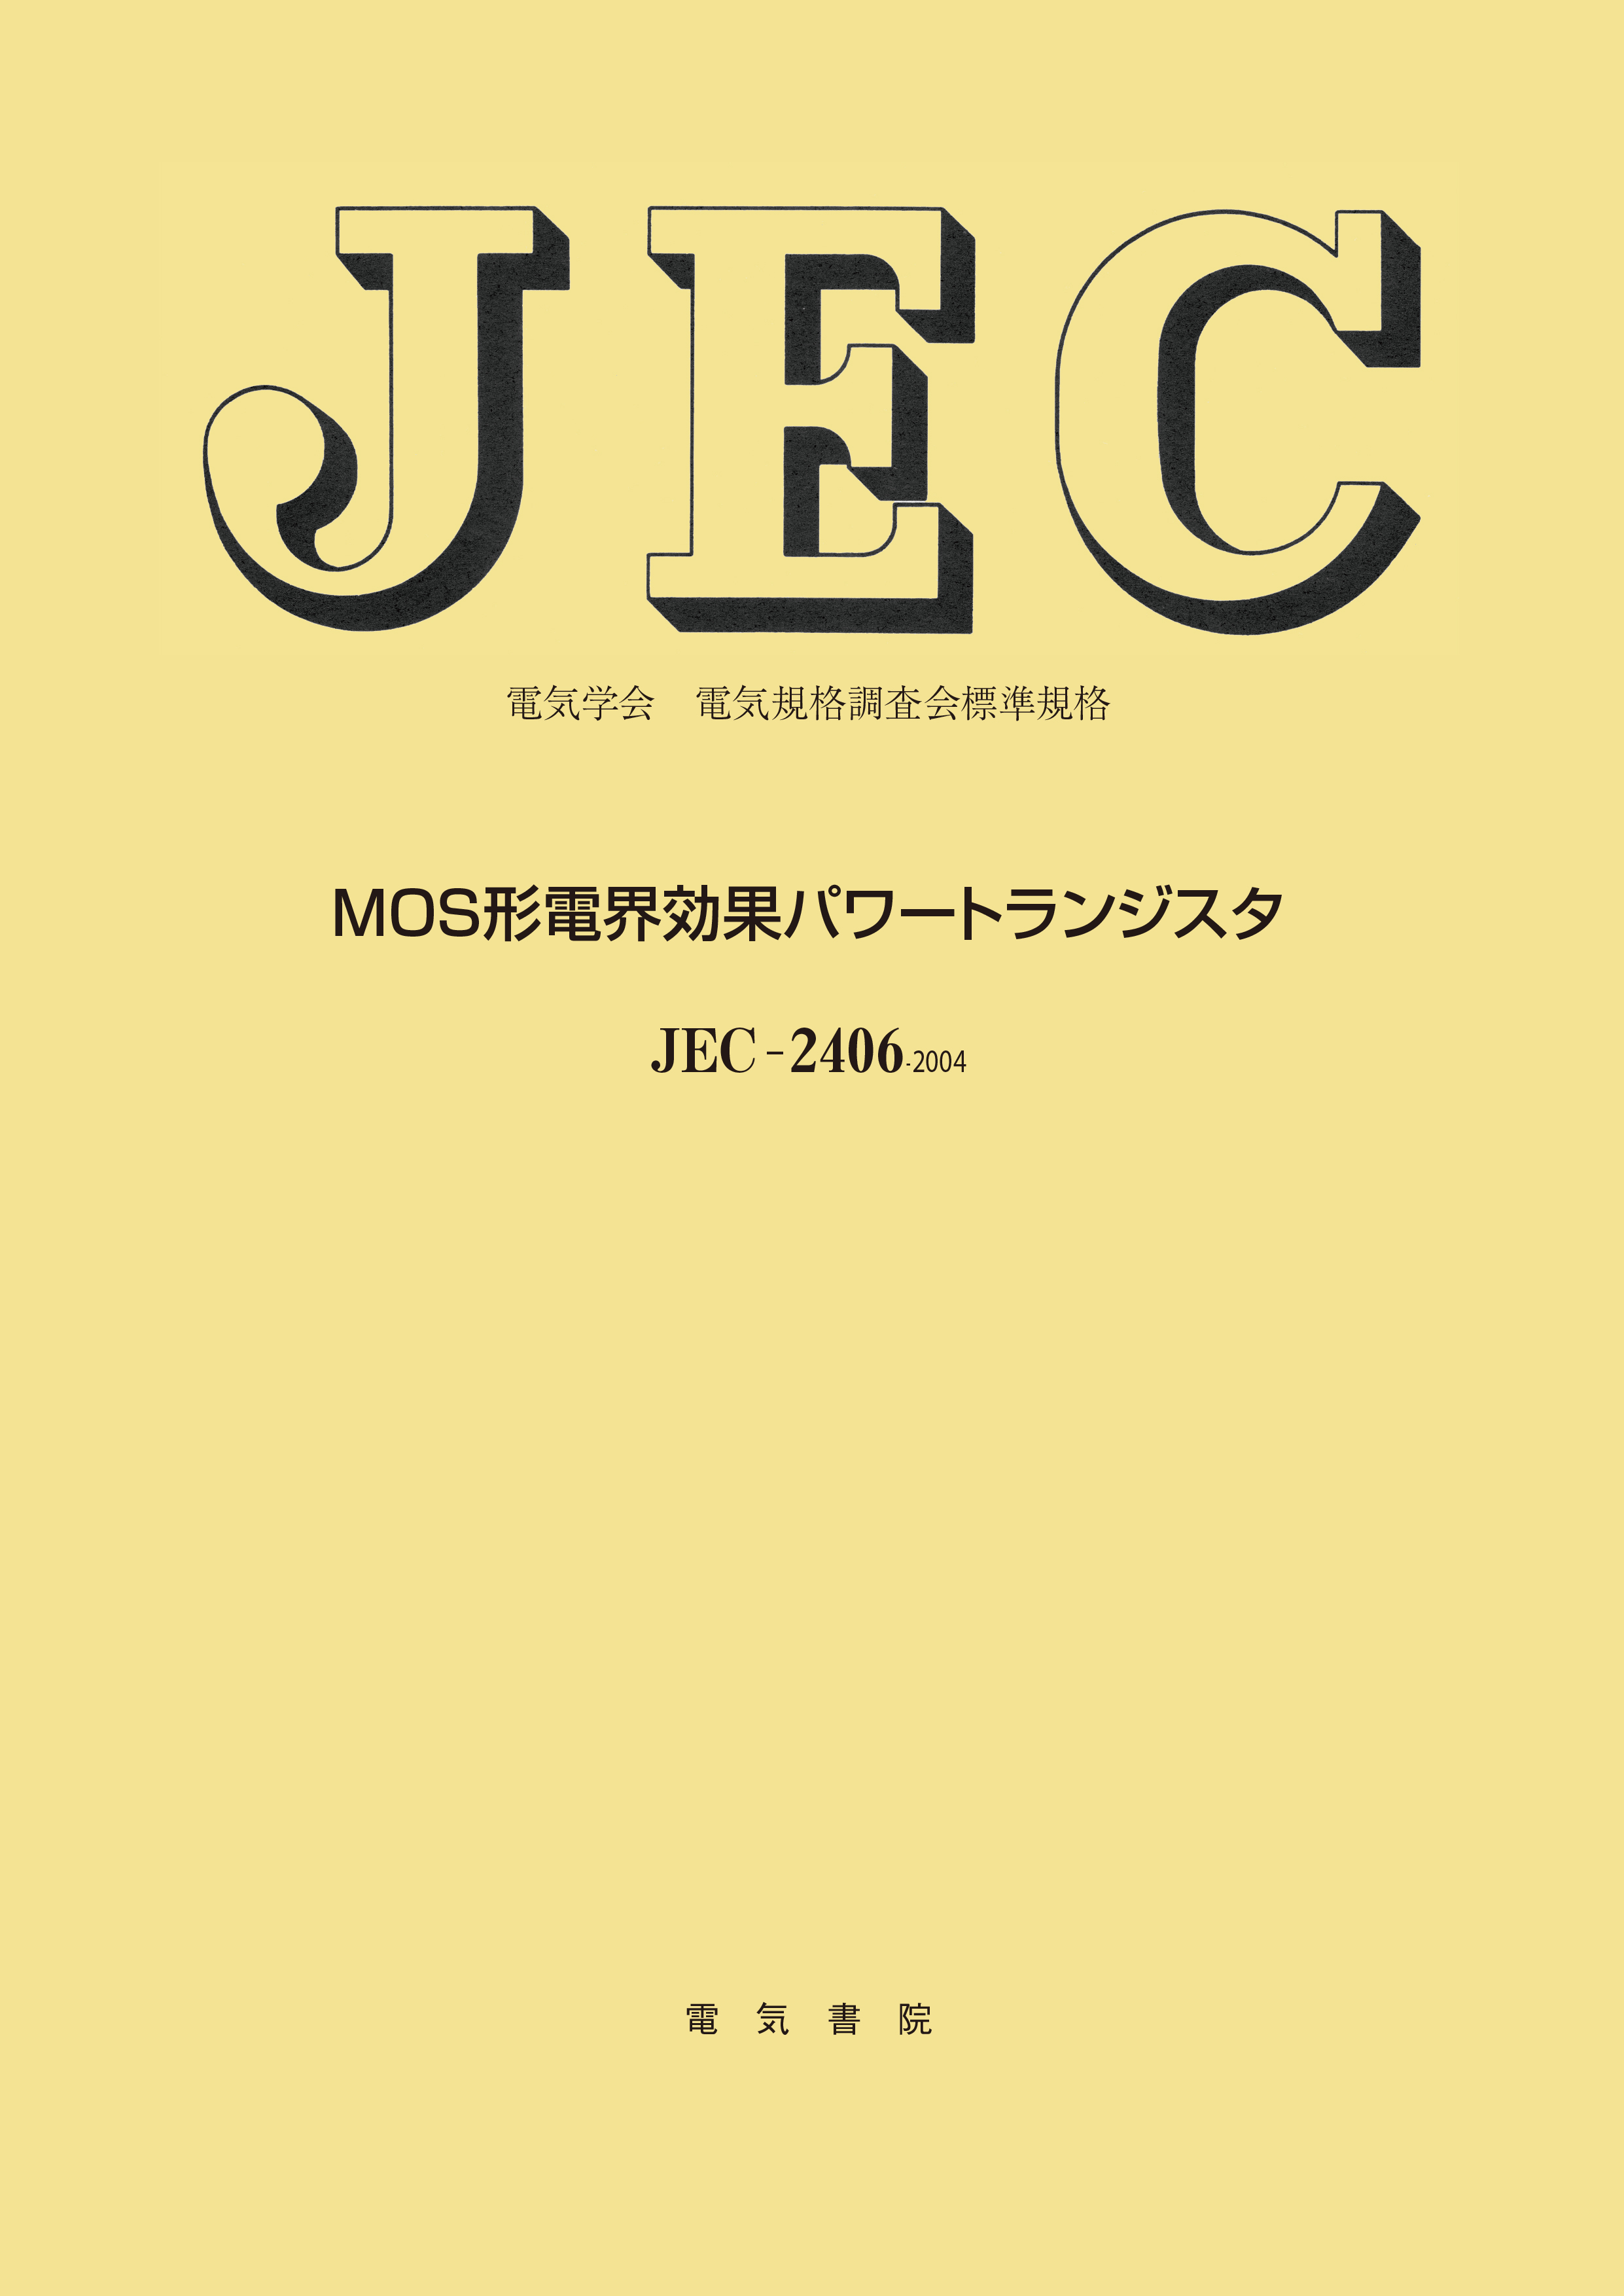 JEC-2406　MOS形電界効果パワートランジスタ